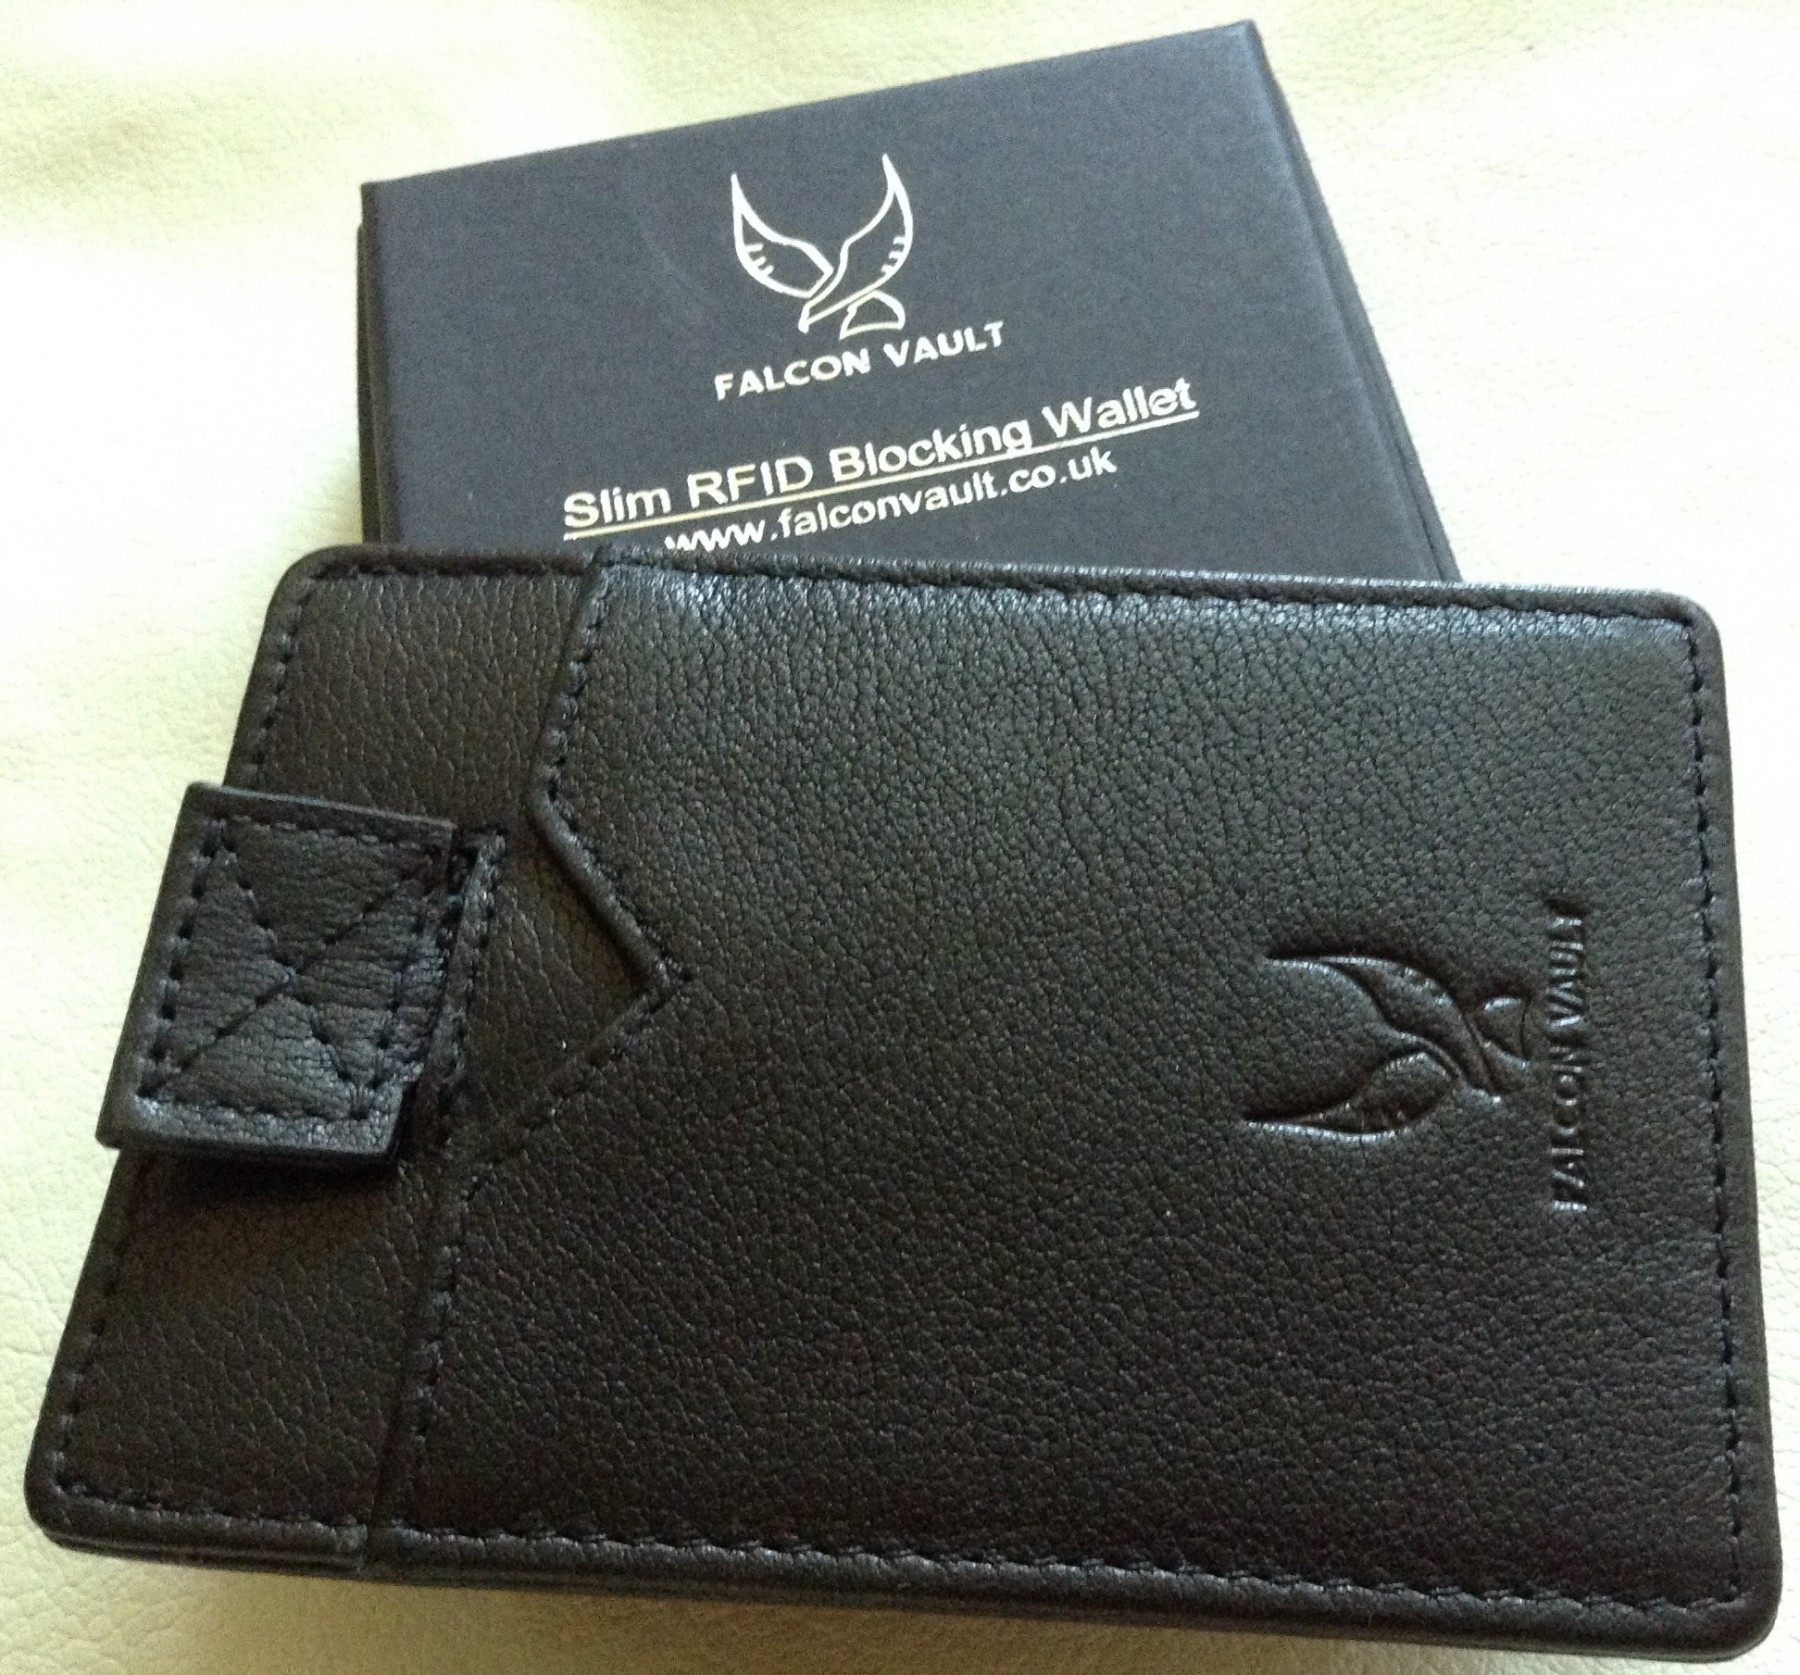 A Luxurious, Beautifully Designed, Men’s RFID blocking Card Holder Wallet